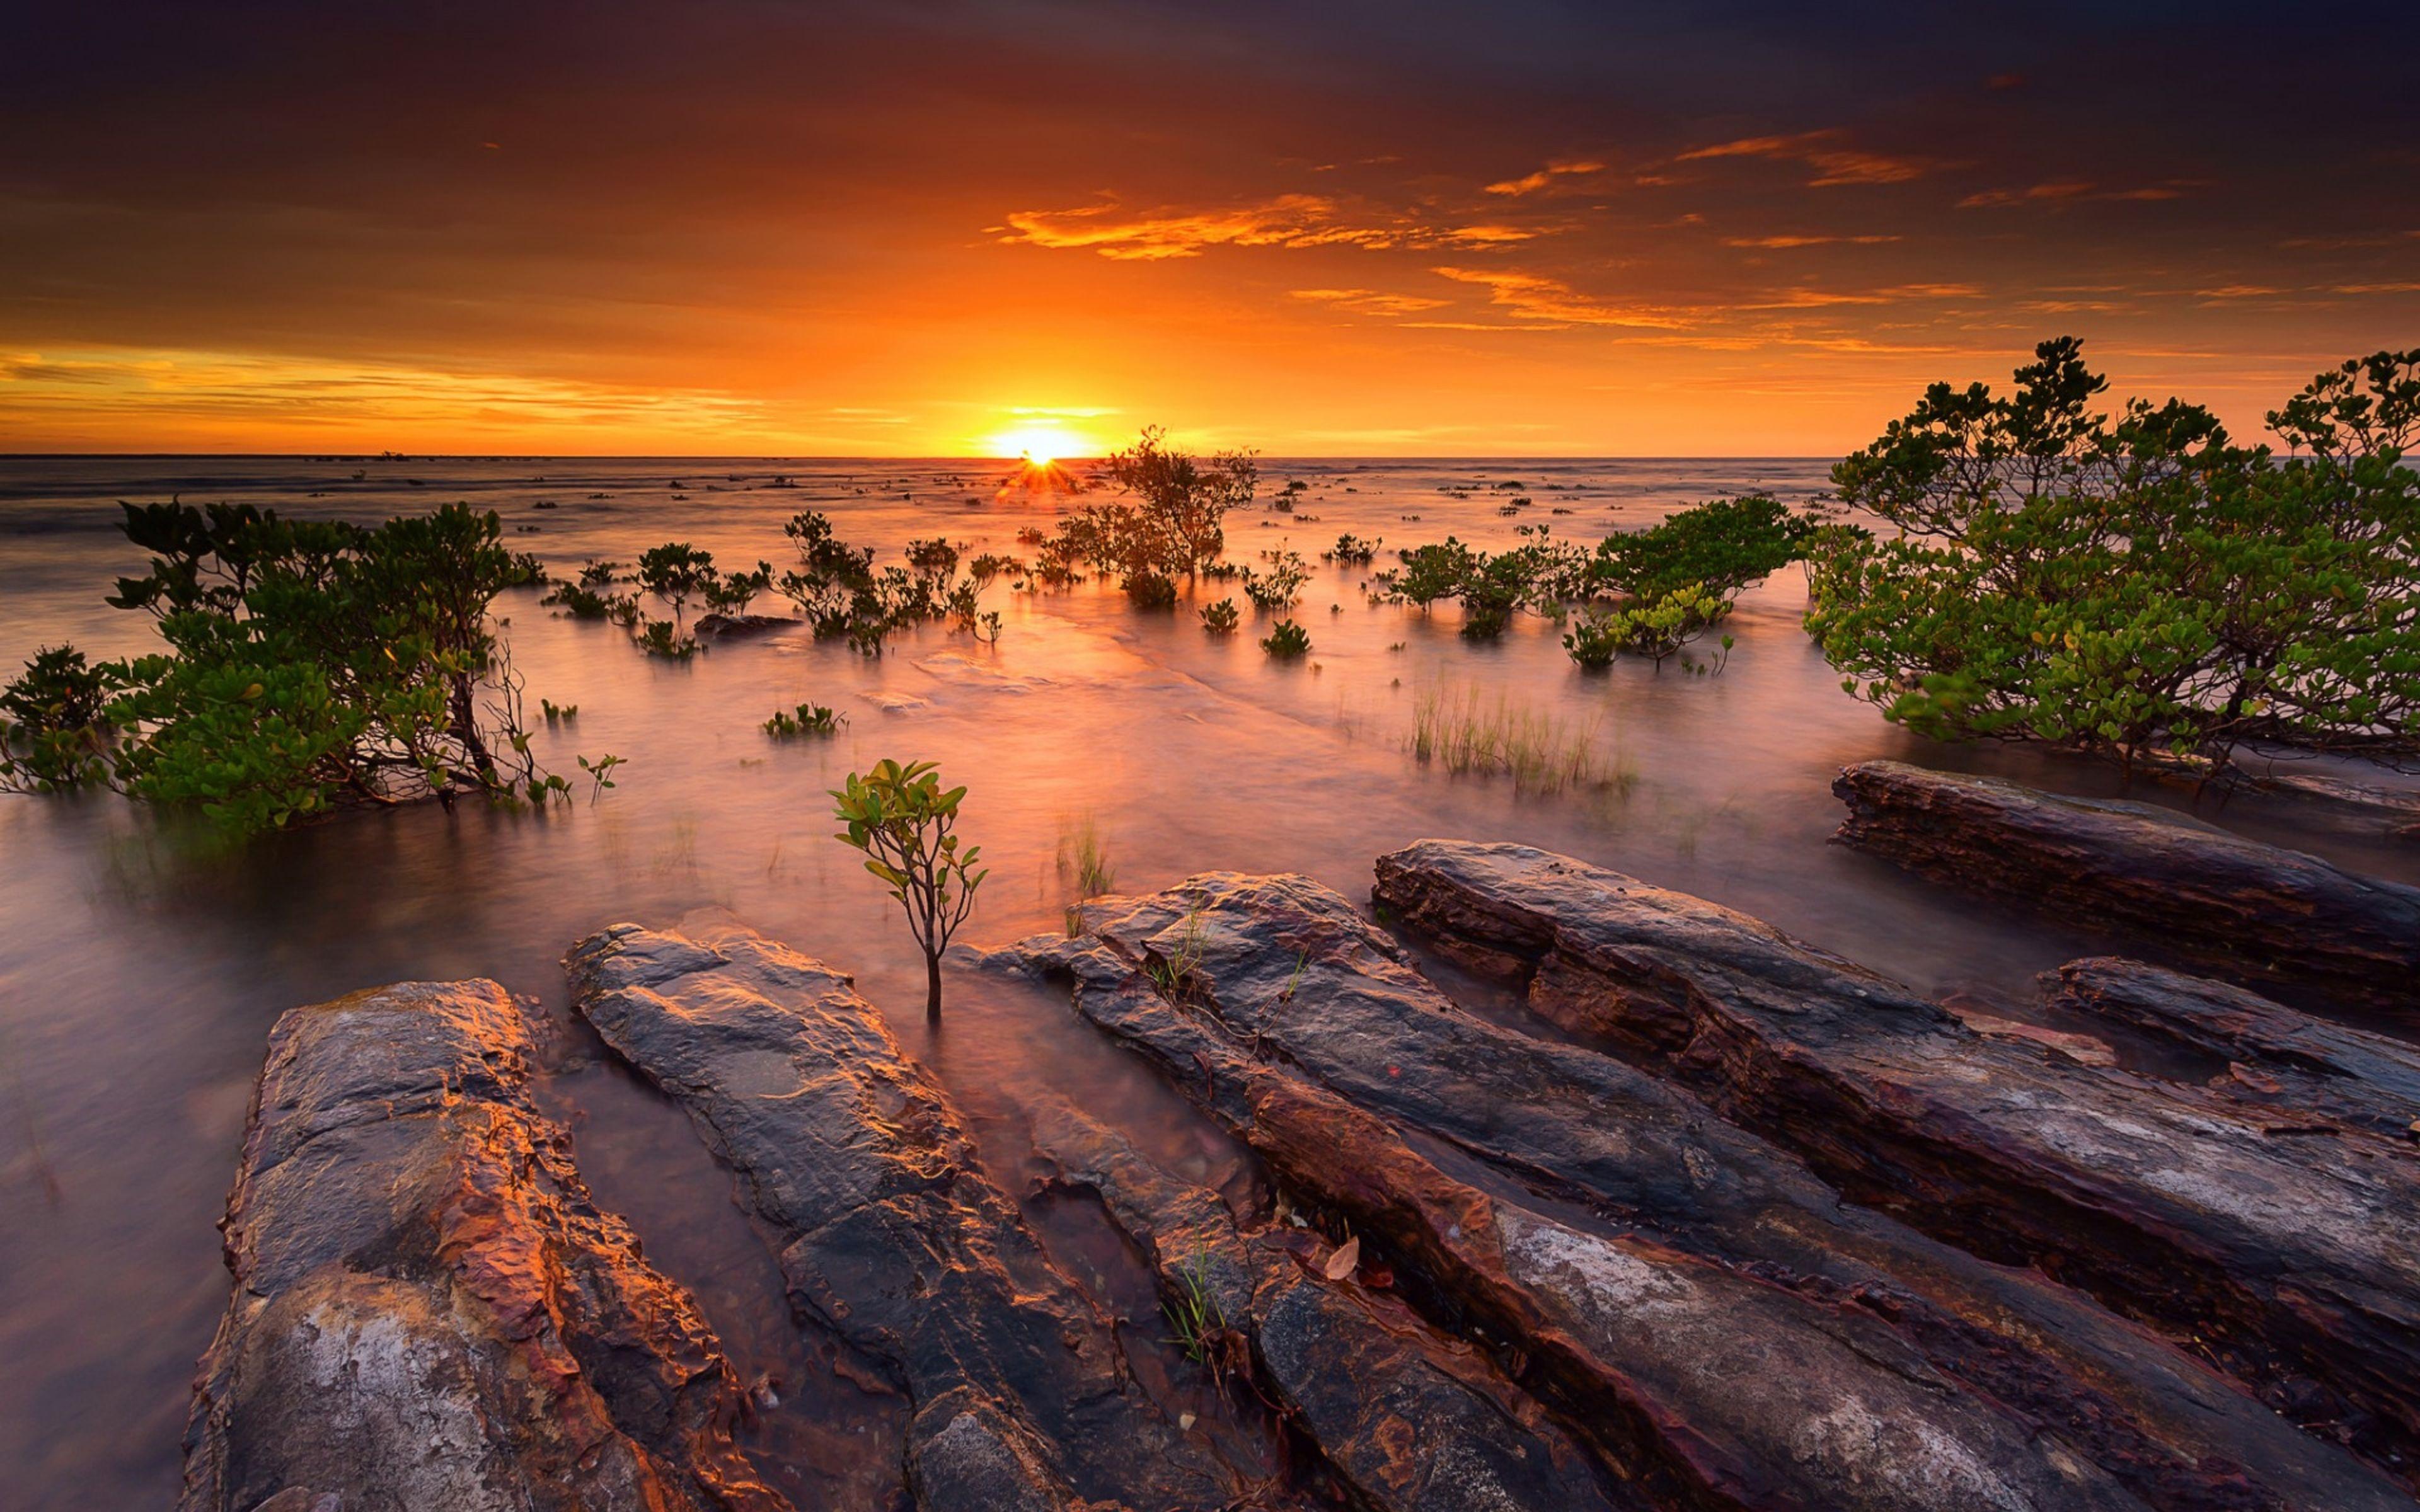 Природа австралии климат. Австралия природа. Тасмания Австралия. Австралия Эсперанс каньон.